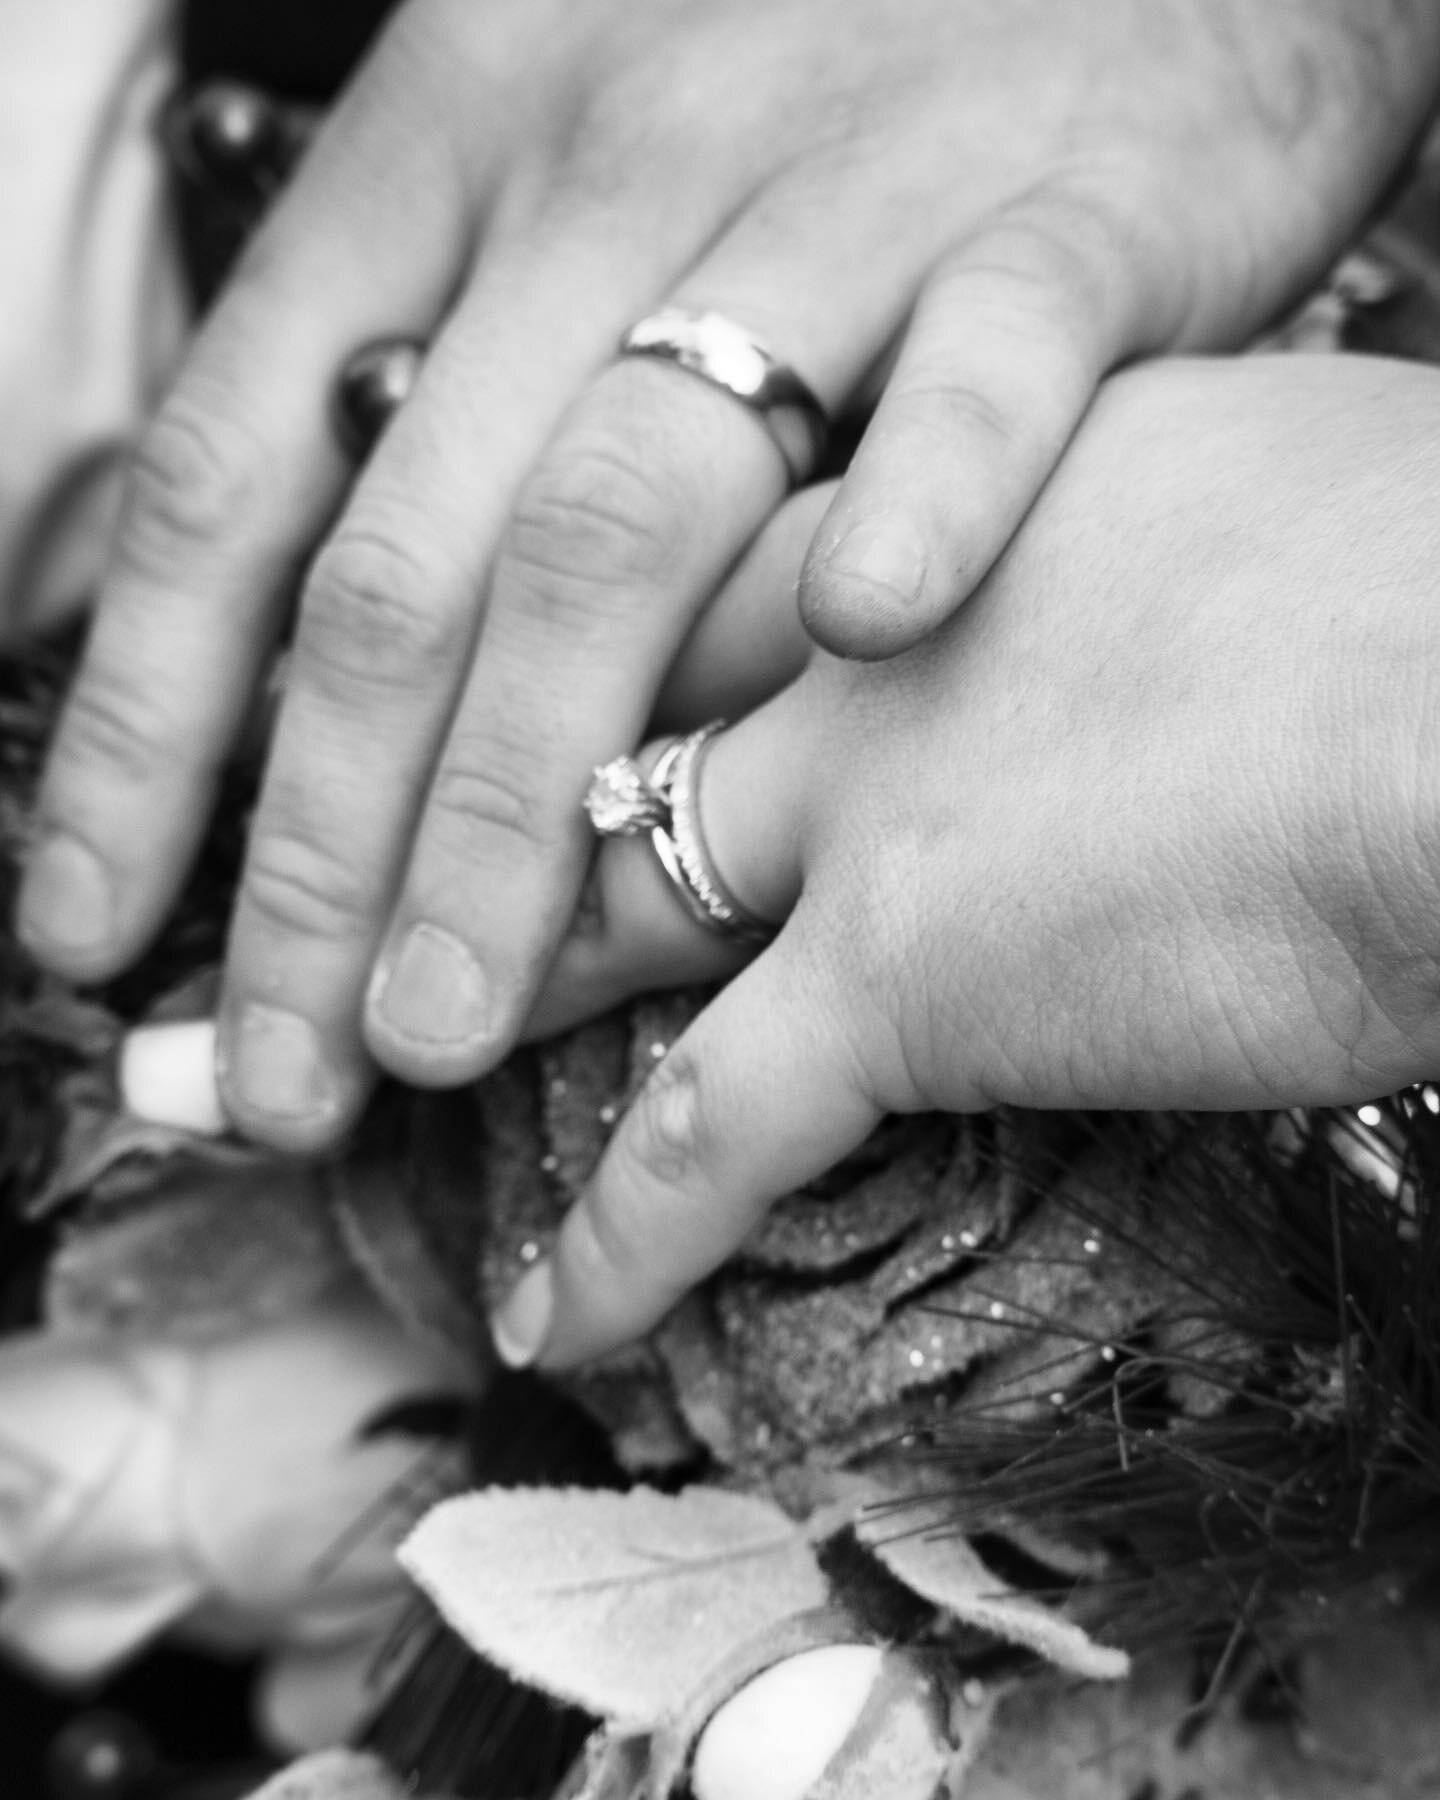 Hands tell stories ❤️
.
.
.
.
.
.
#wedding #closeup #newlyweds #fallwedding #winterwedding #weddingphotography #hands #rings #blackandwhite #cannon #cannonEOSM50 #highschoolsweethearts